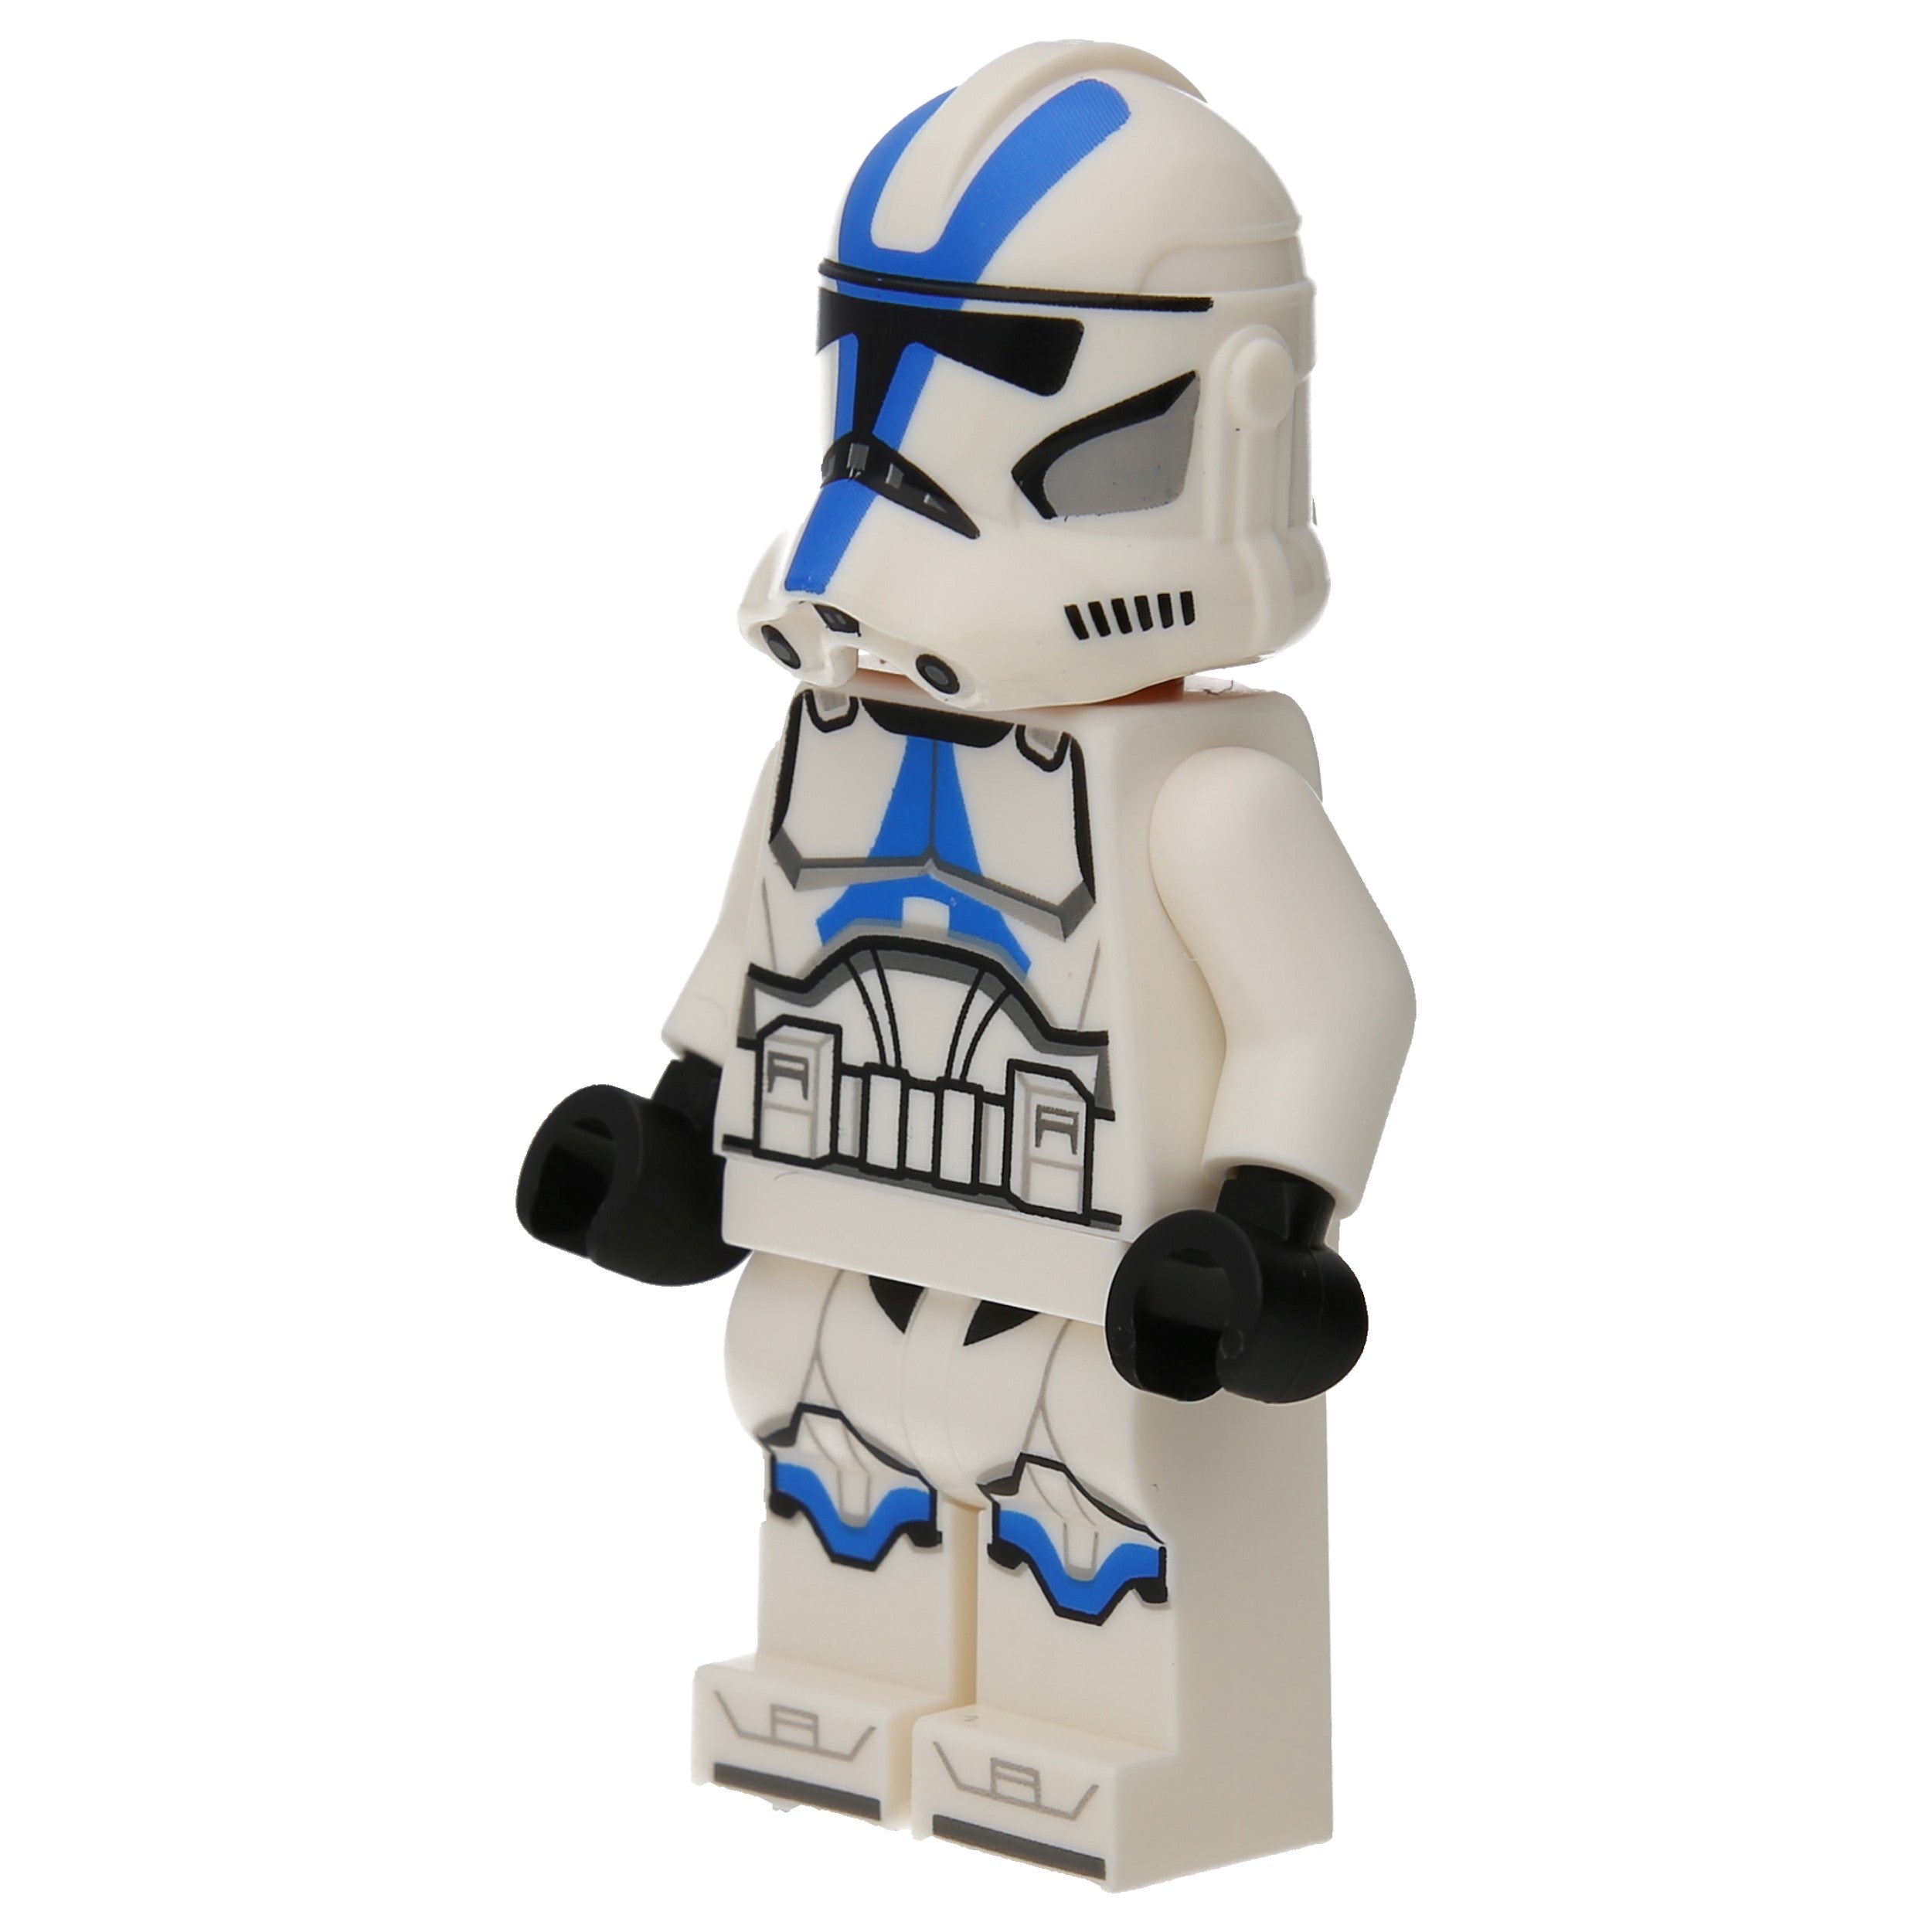 LEGO Star Wars Minifigure - Clone Warrior of the 501st Legion